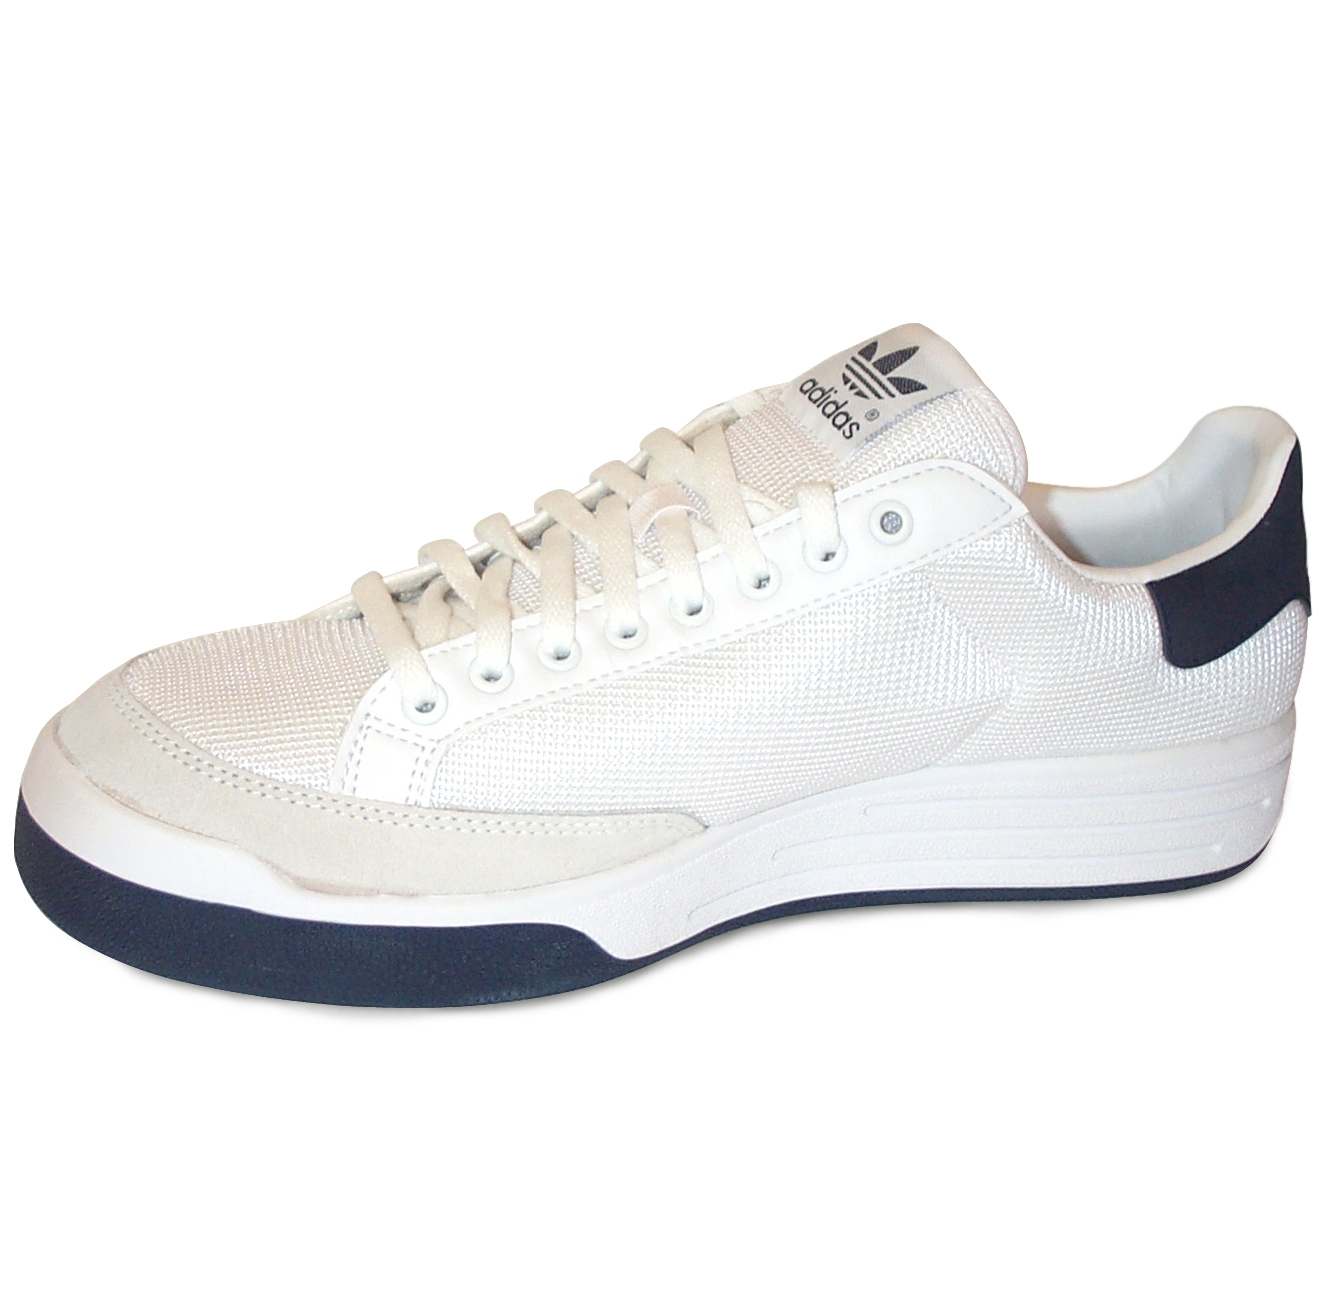 Idioot Briesje Omkleden Adidas Rod Laver Super Tennis Shoe White/Navy | World Footbag